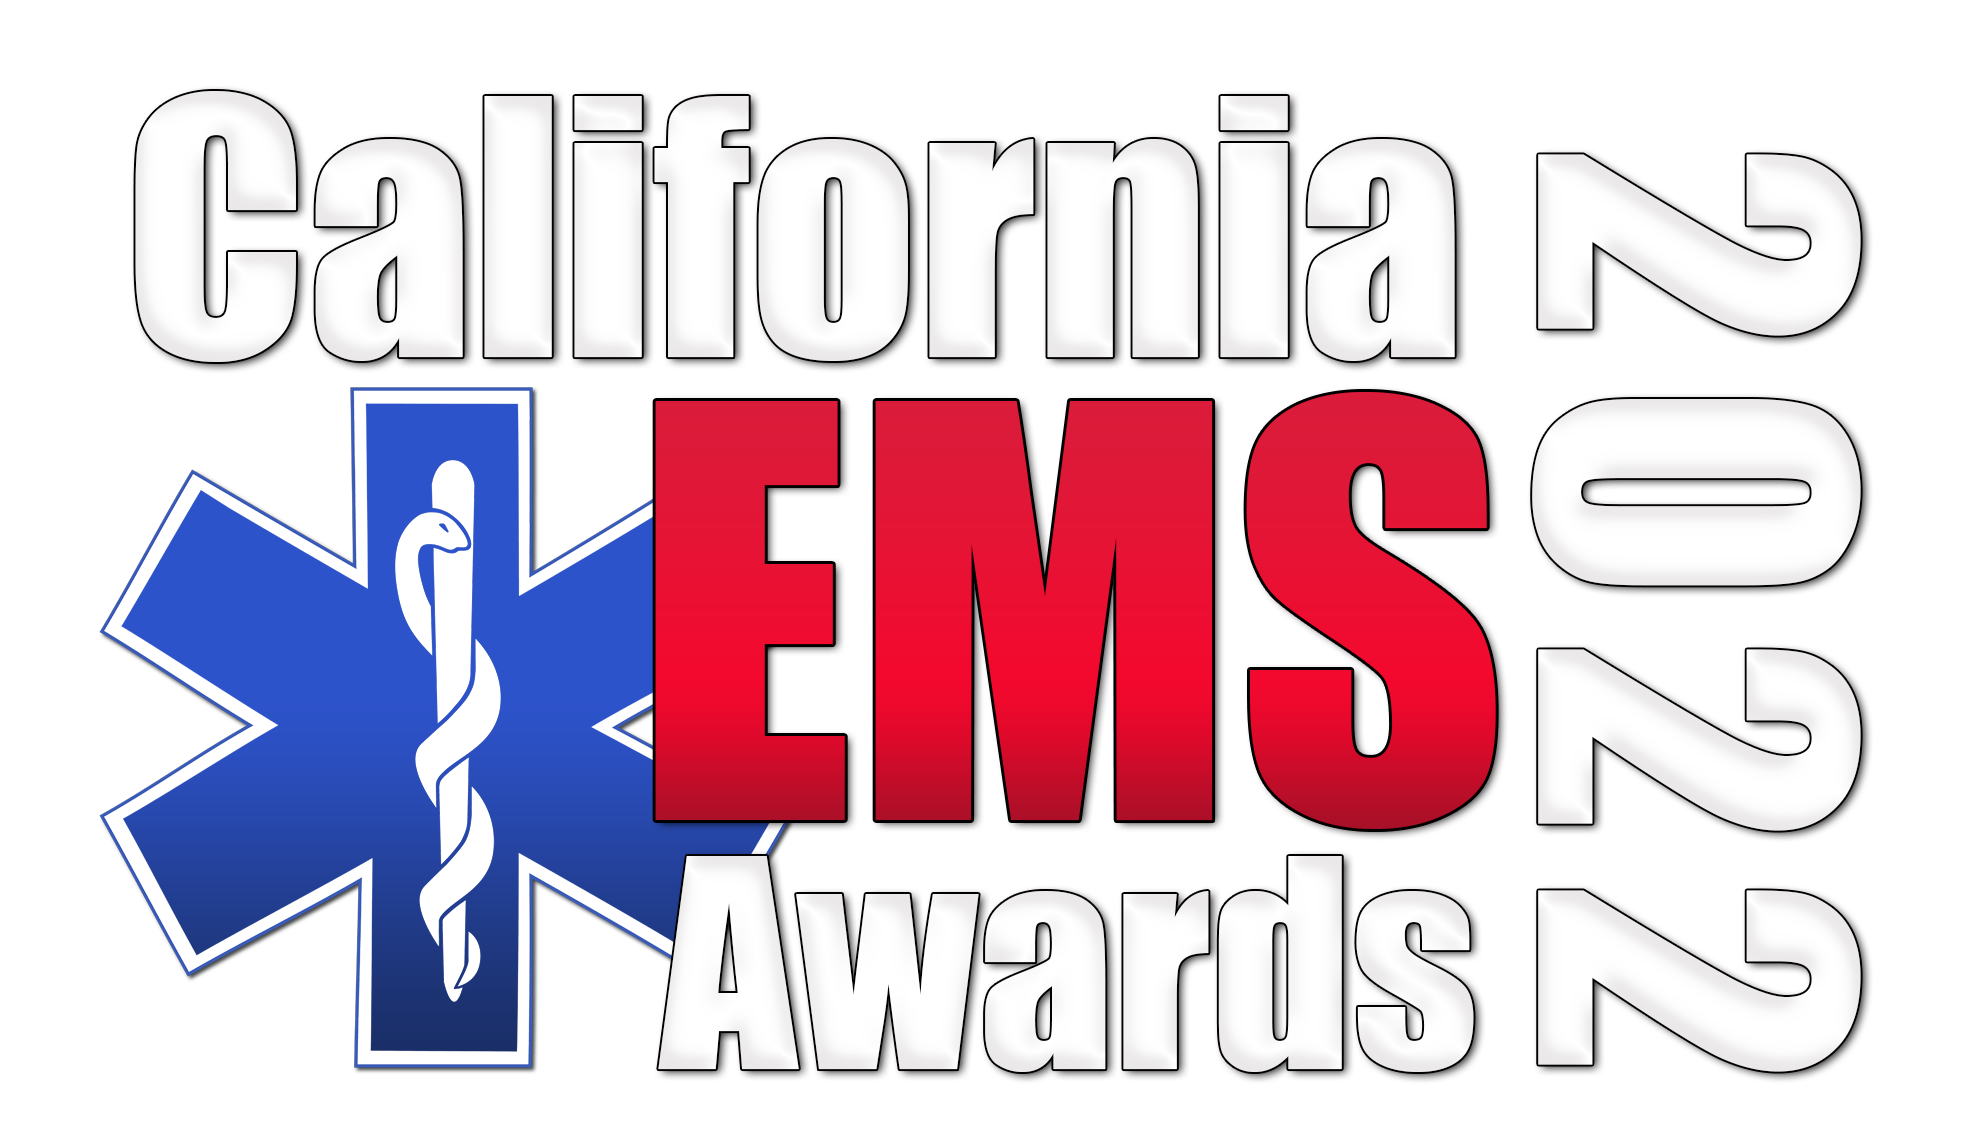 California EMSA Awards 2022 logo